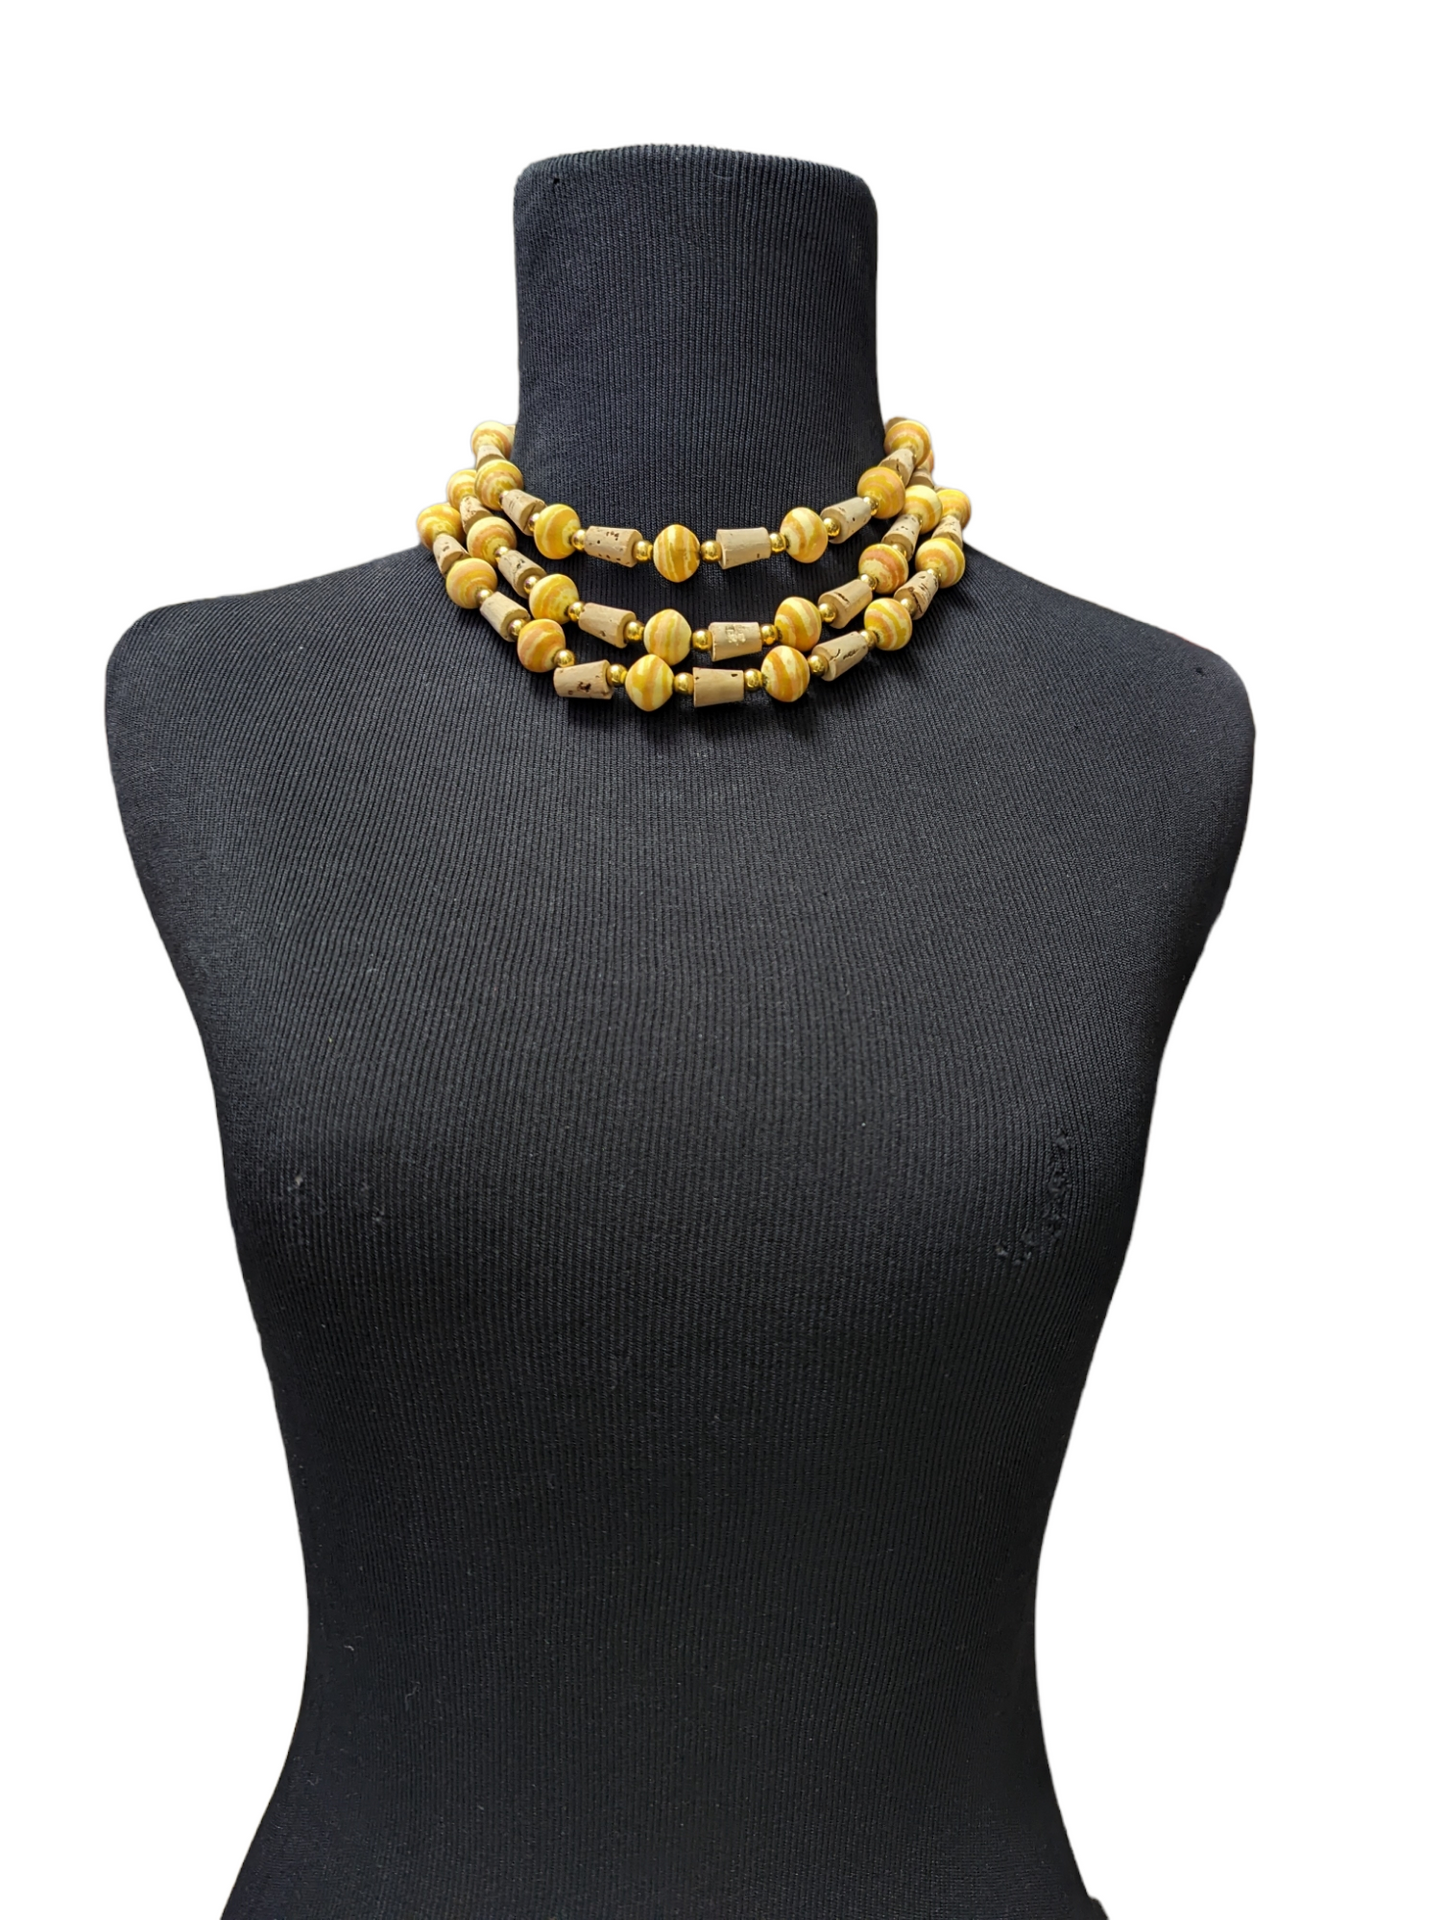 50's/60's Multistrand Cork Necklace